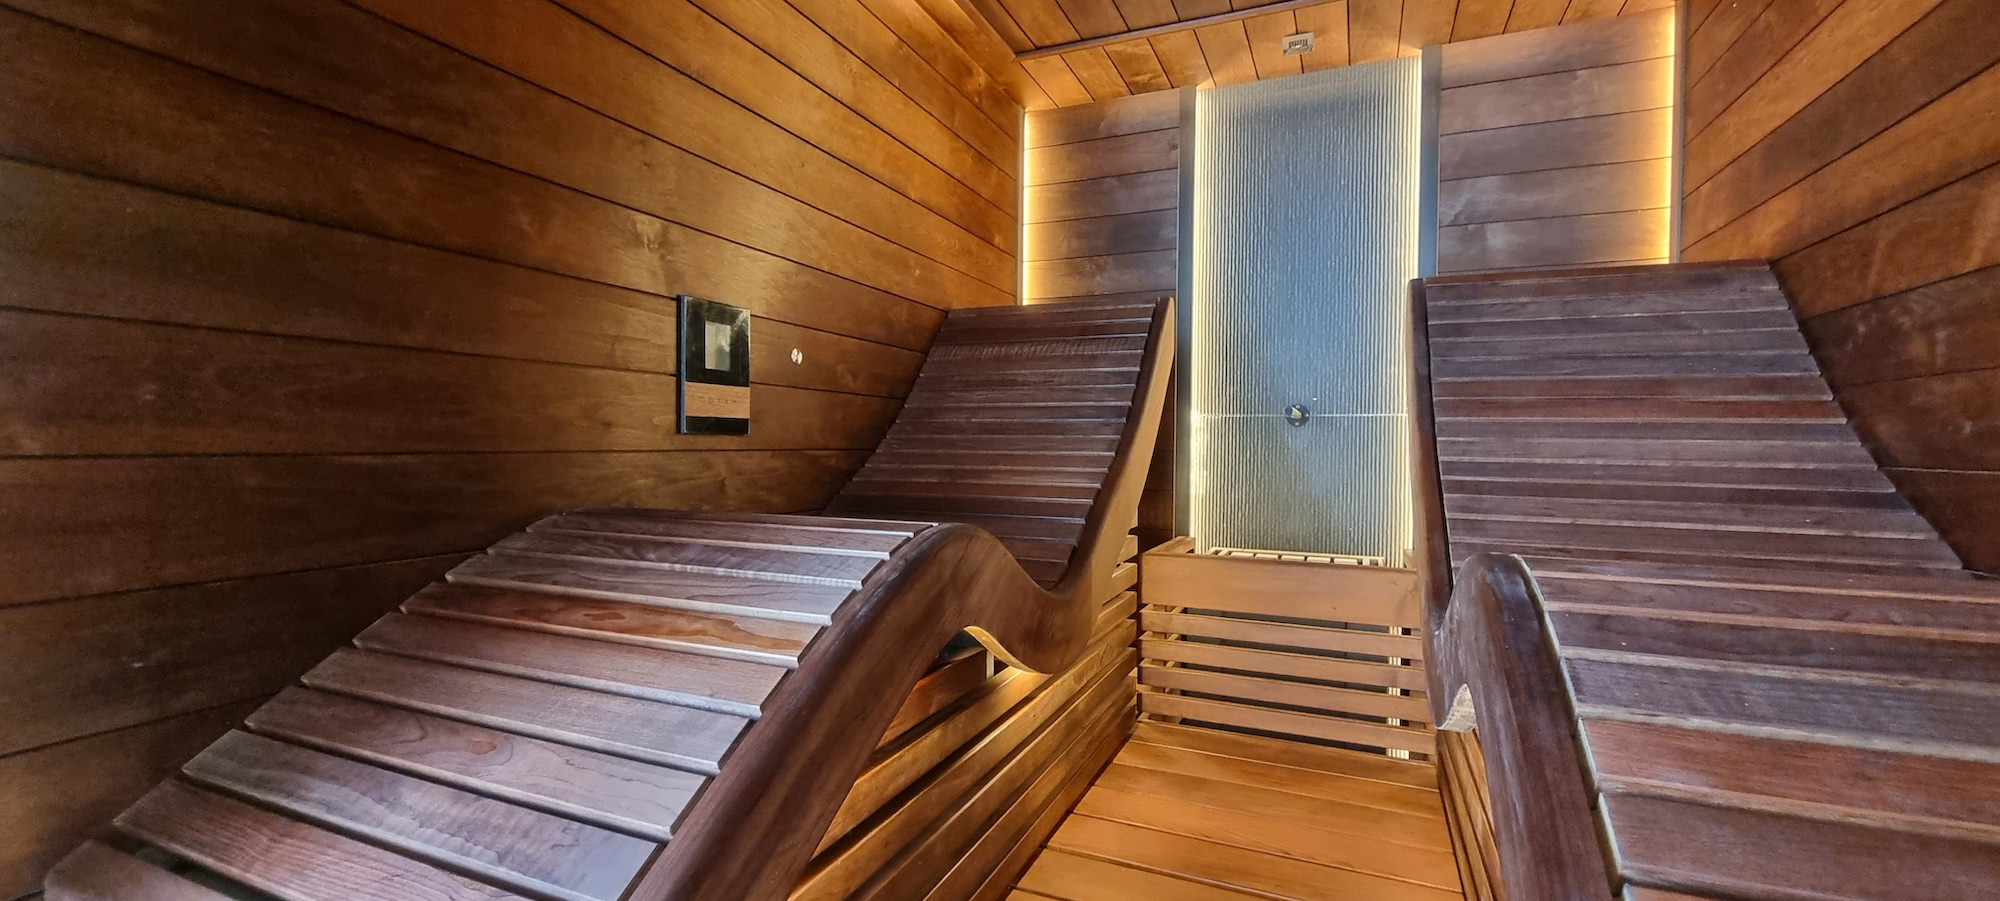 sauna by UK-based sauna design and manufacturer Finnmark in Effect Magazine